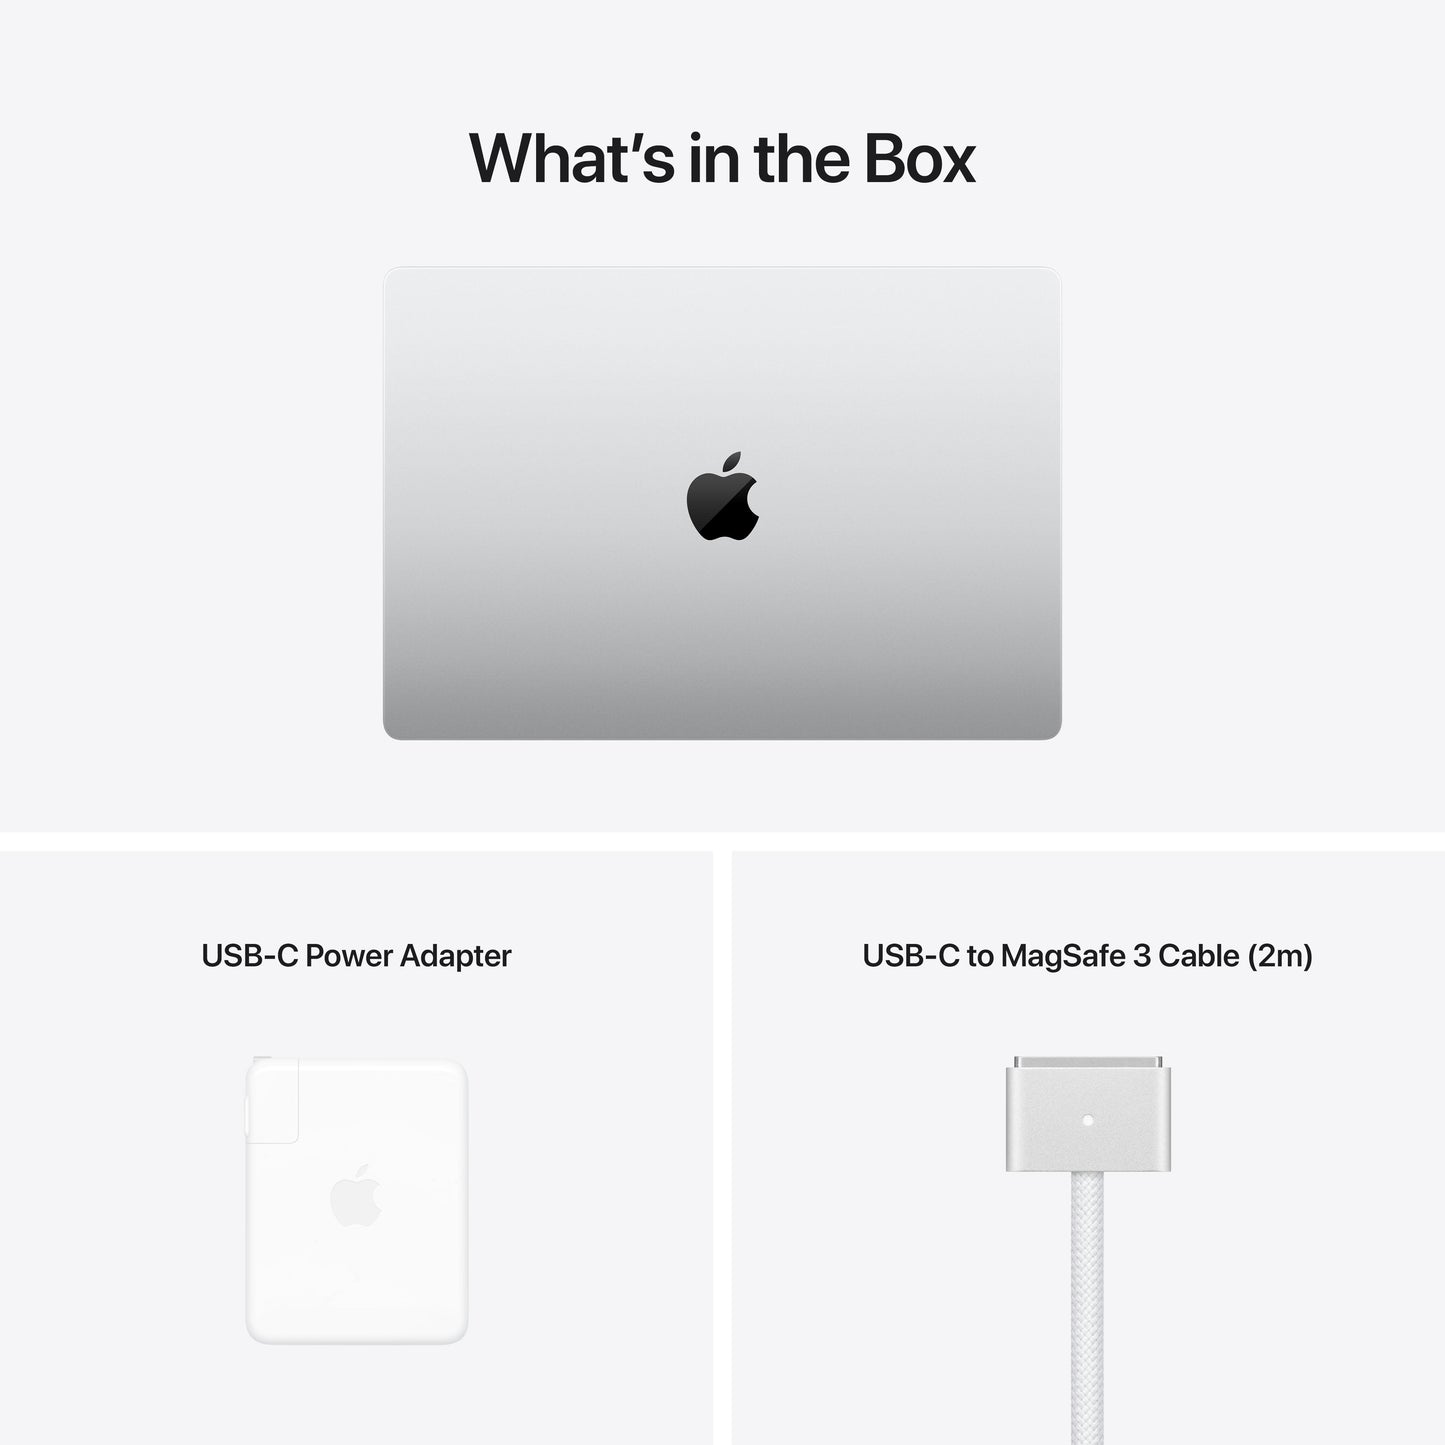 MacBook Pro مقاس 16 انش: شريحة Apple M1 Pro مع وحدة معالجة مركزية 10 نوى و 16 وحدة معالجة رسومات أساسية، 1 تيرابايت SSD - فضي